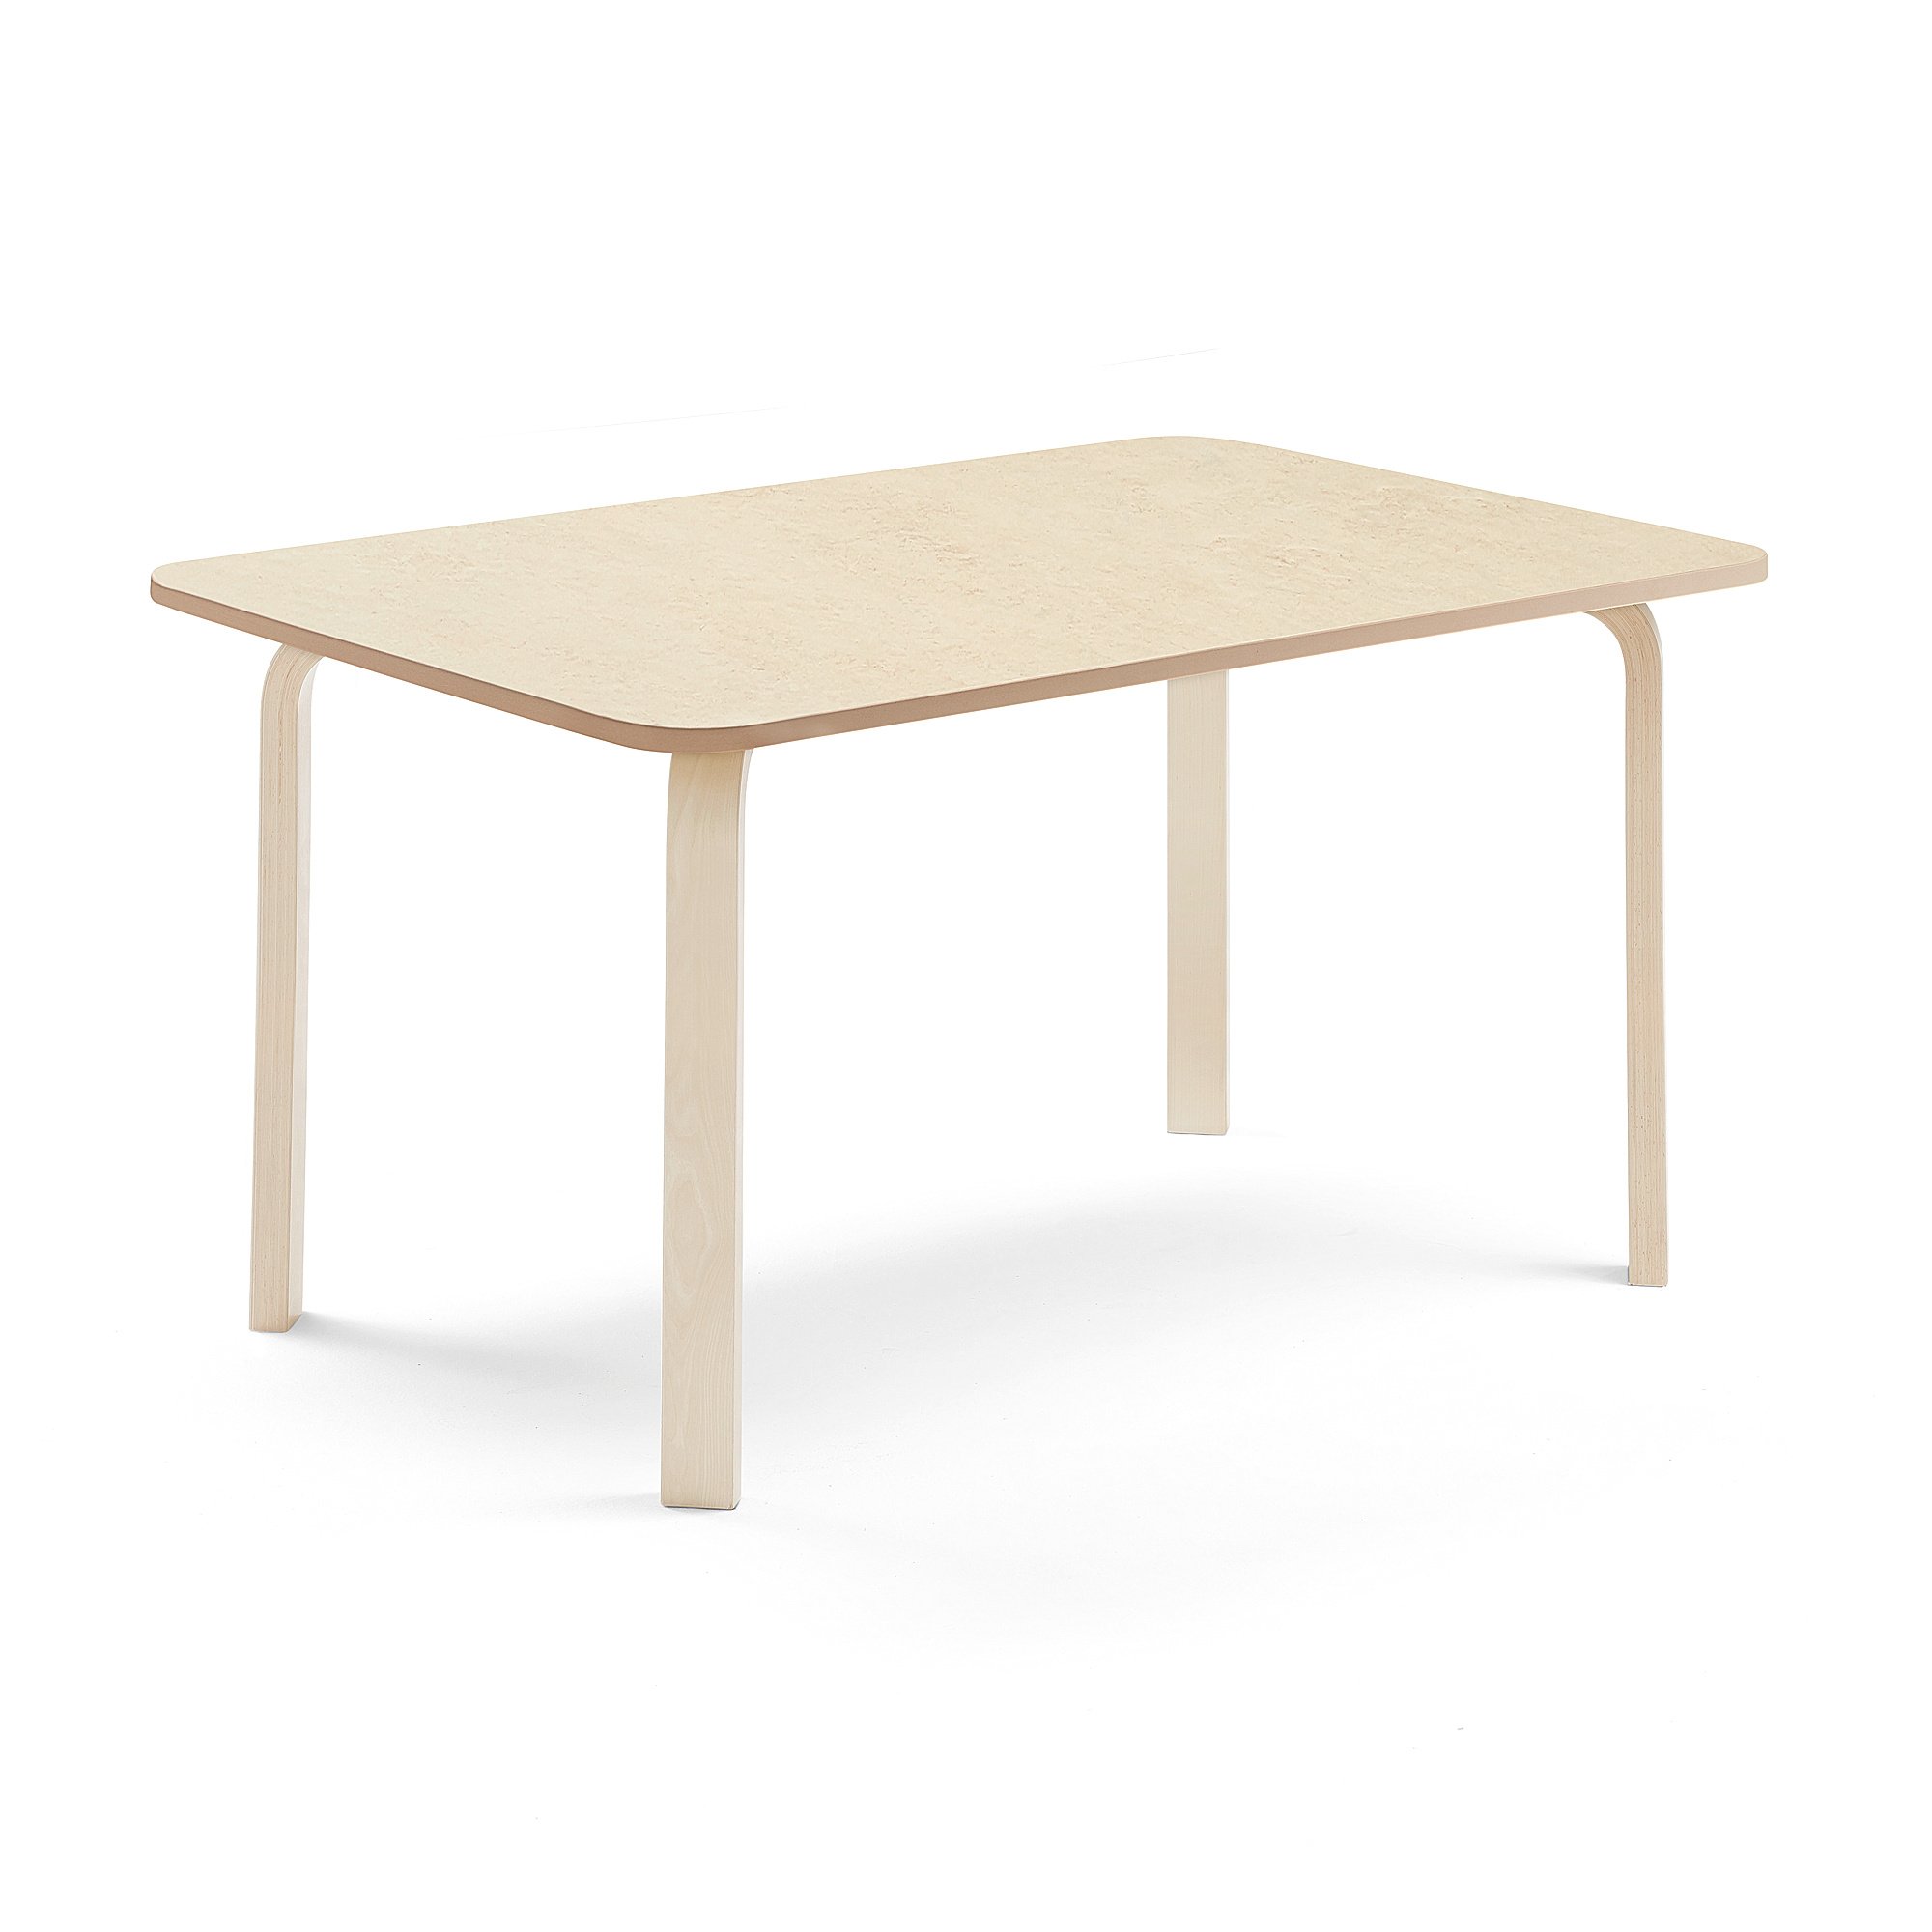 Stůl ELTON, 1400x700x640 mm, bříza, akustické linoleum, béžová